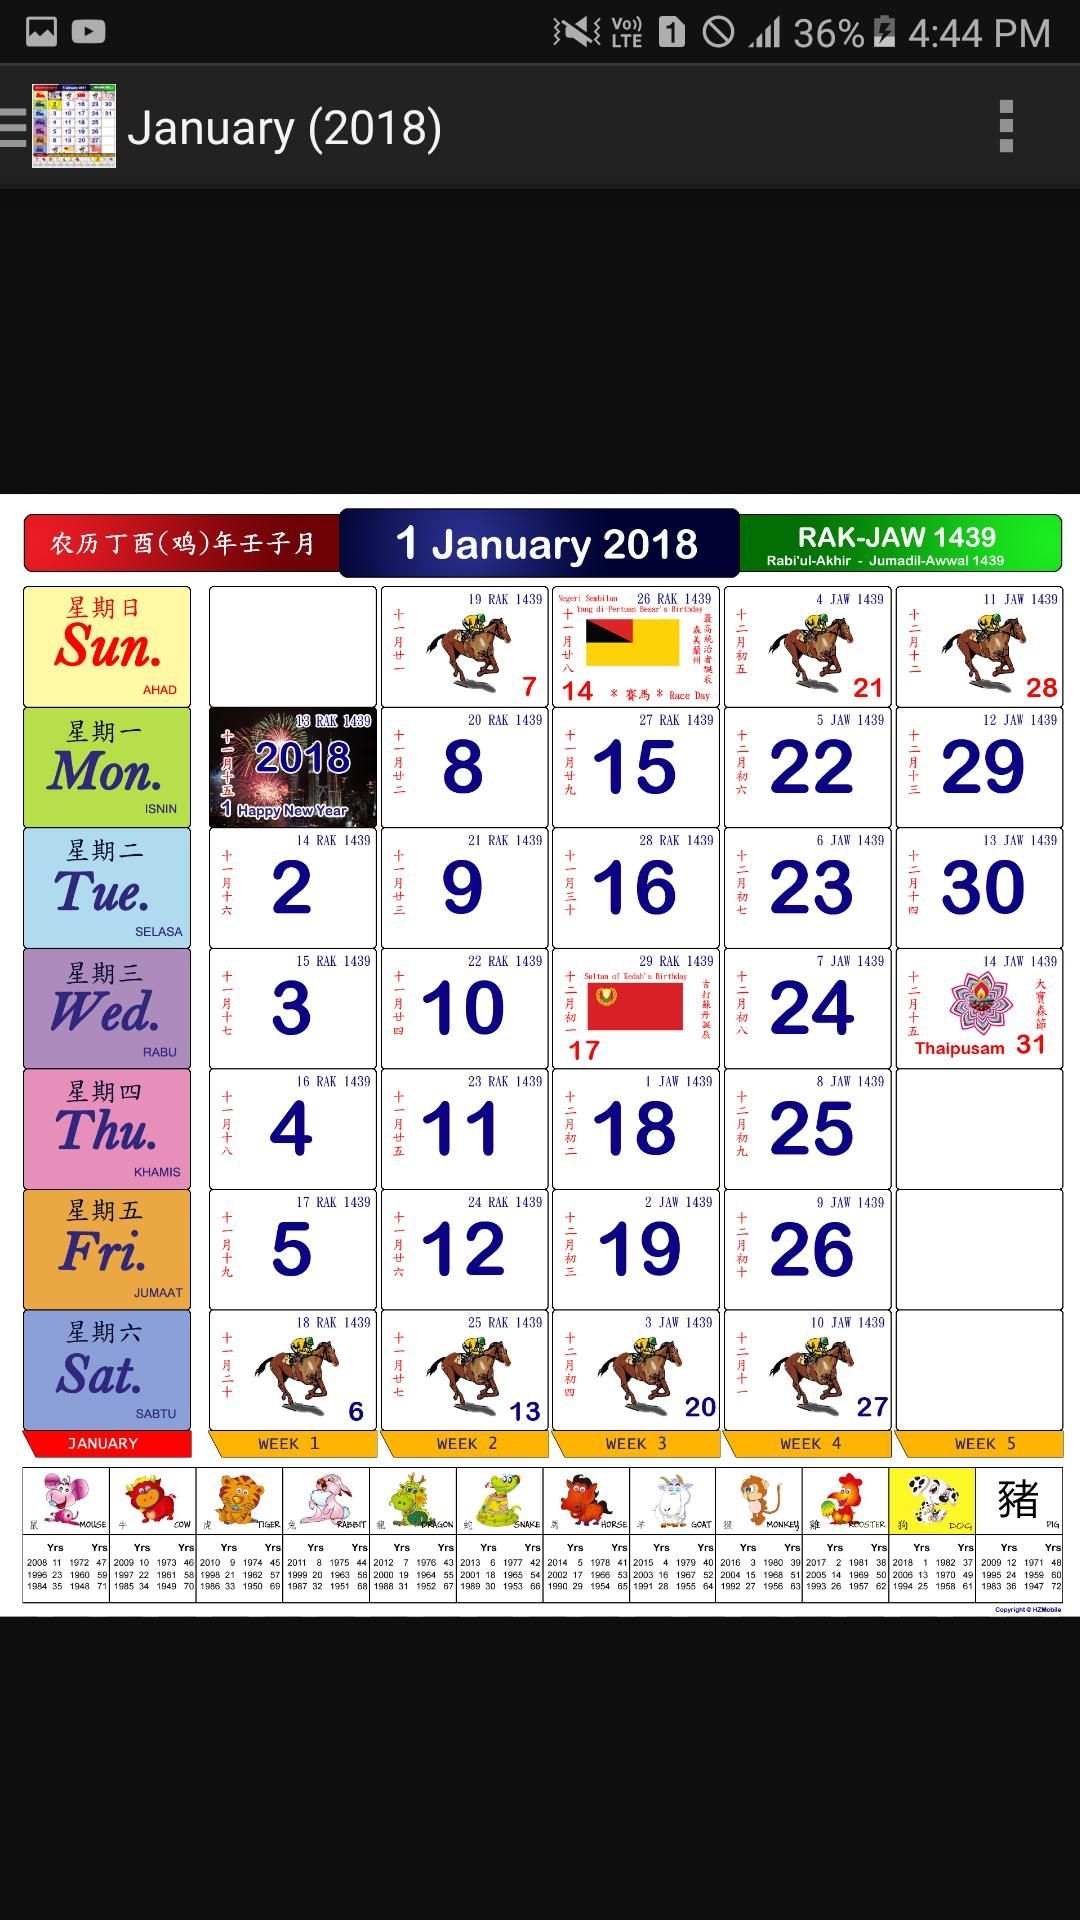 Roblox Event Calendar 2021 | 2021 Calendar